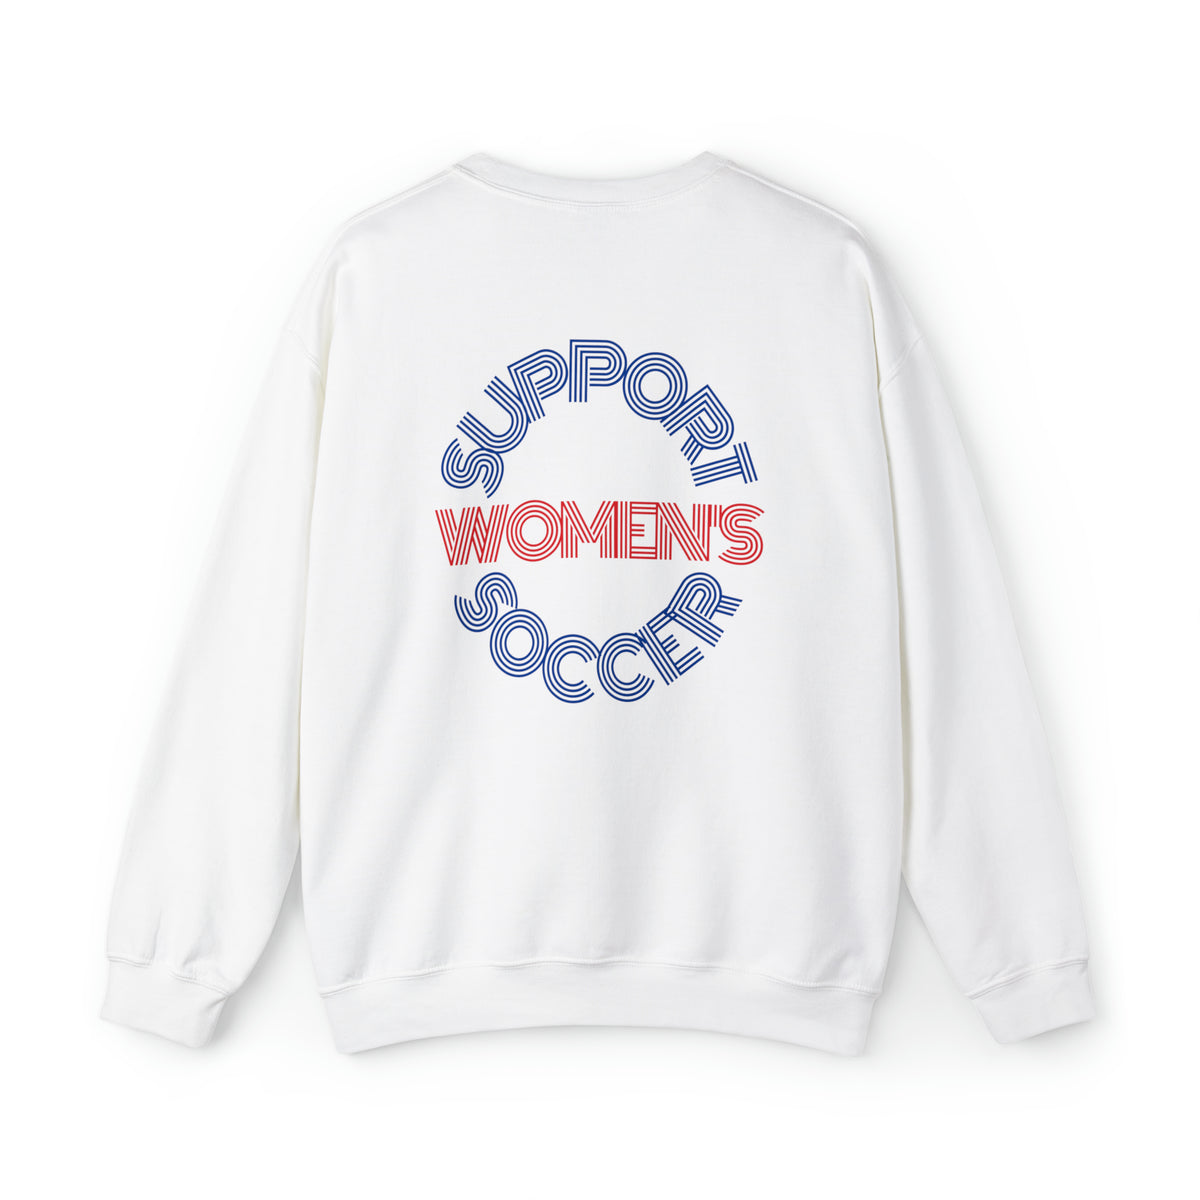 USA Support Women's Soccer Adult Crewneck Sweatshirt